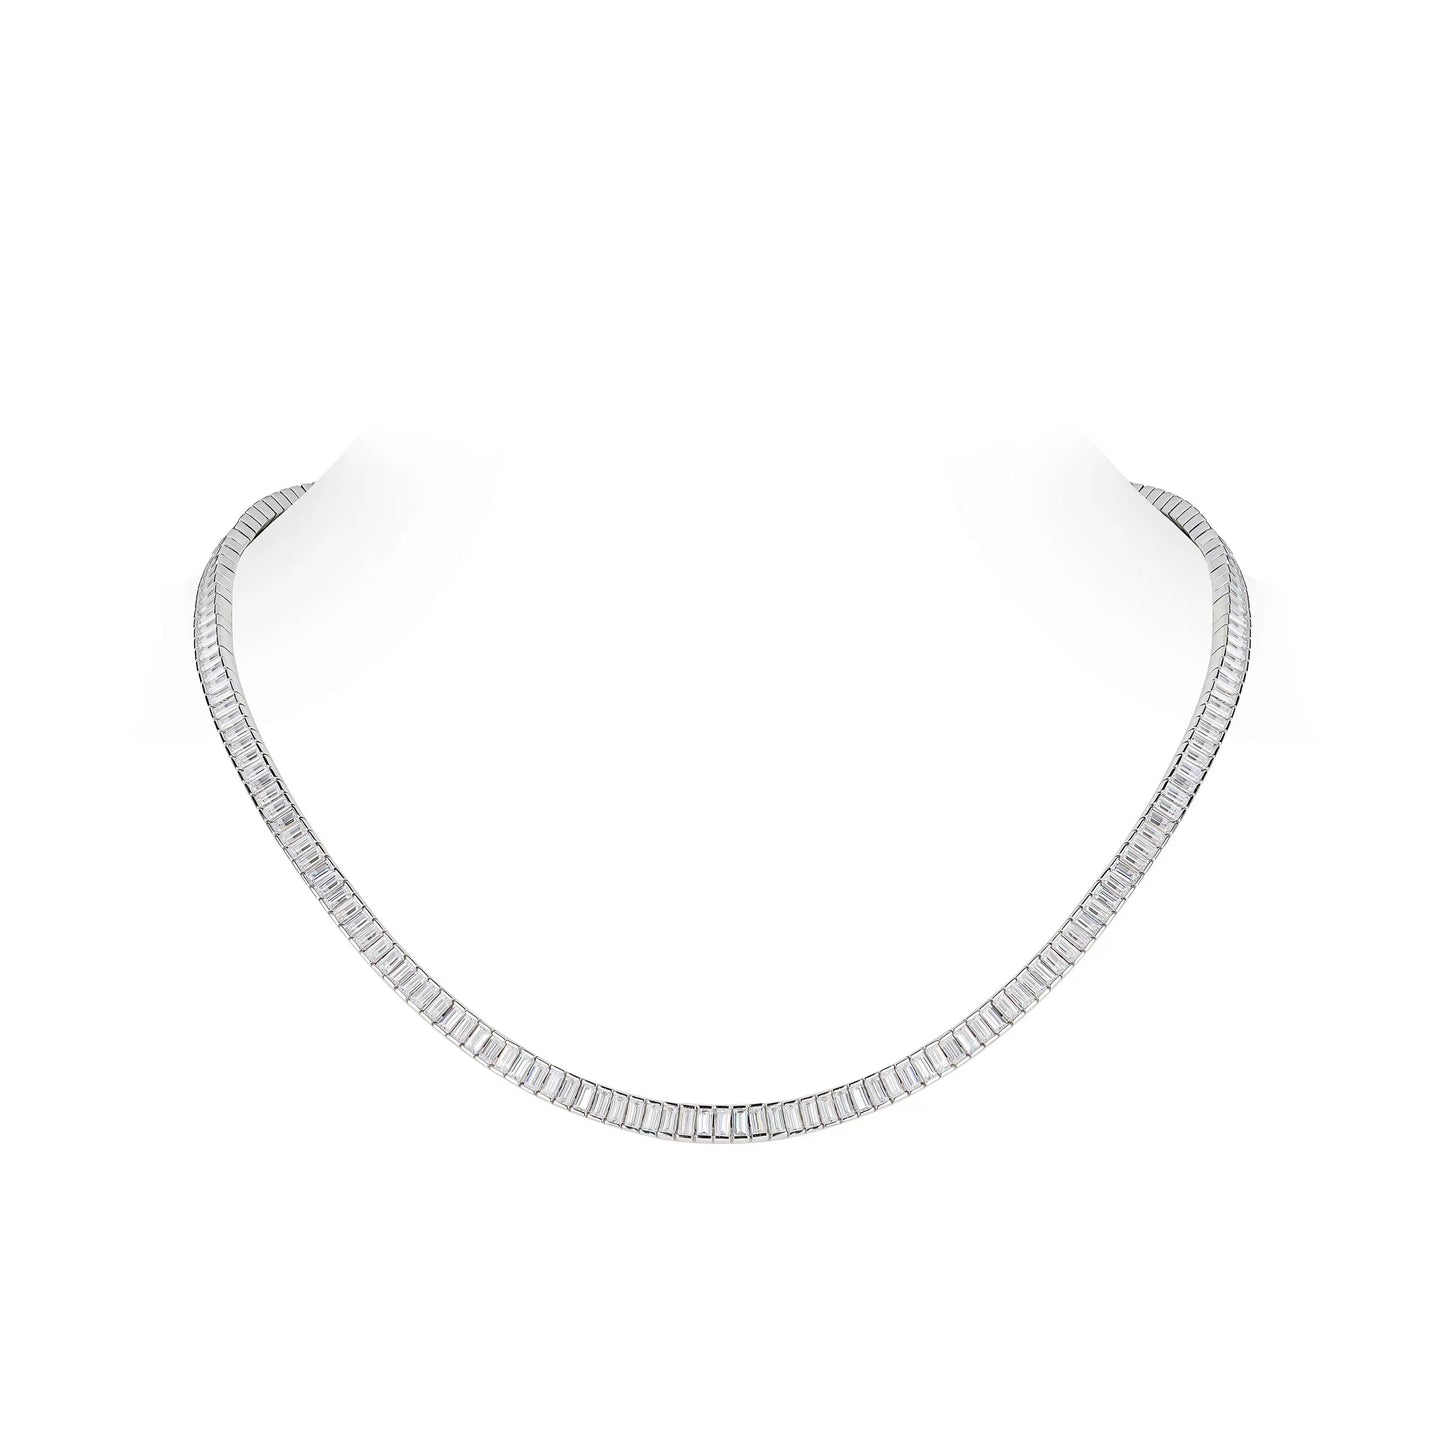 Bespoke customized design: Emerald-cut tennis necklace